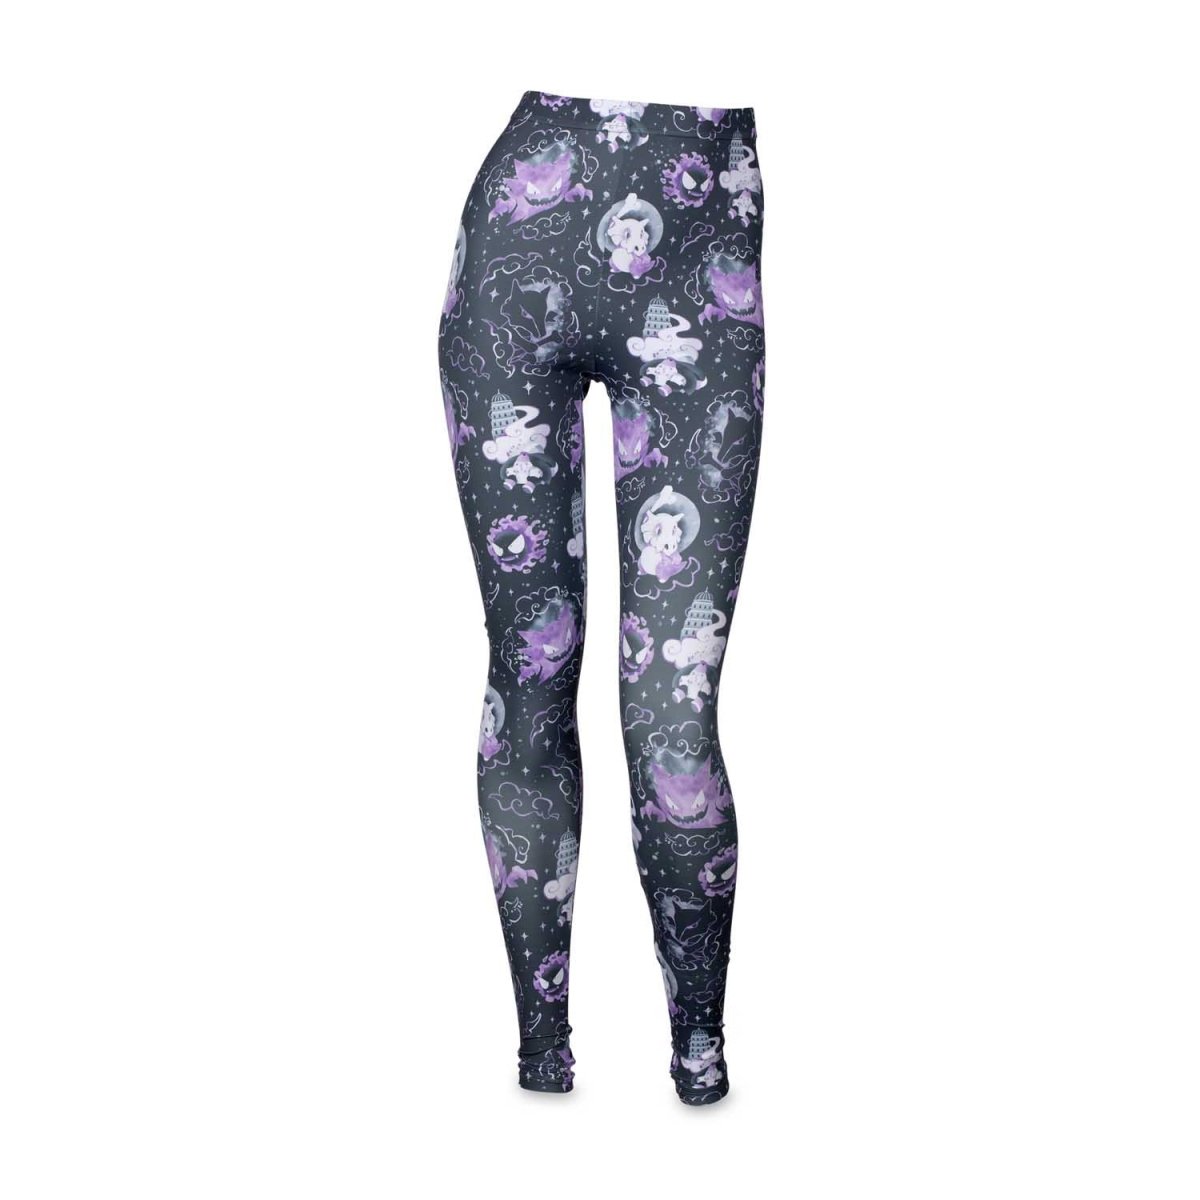 CLOOCL Women Legging Romantic Lavender Pattern 3D Printed Trousers